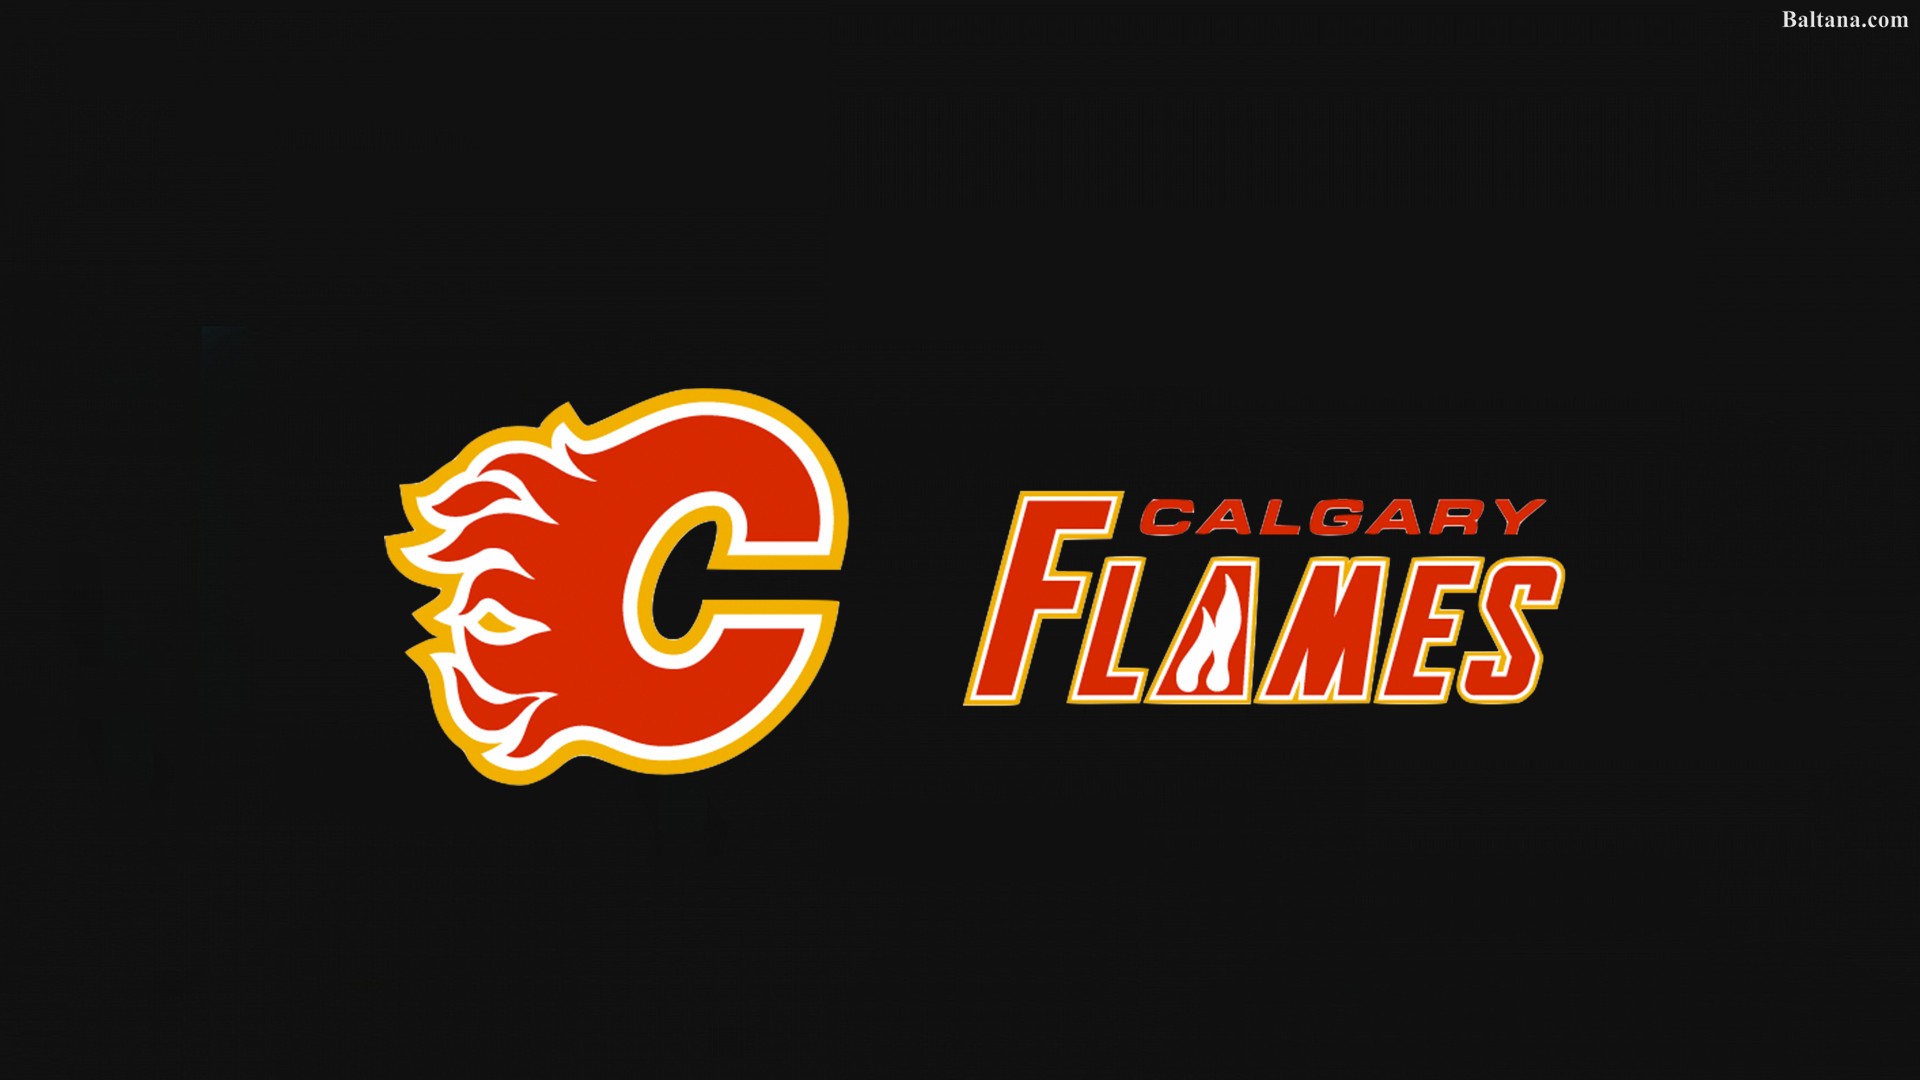 Calgary Flames Background Wallpaper - Calgary Flames Wall Paper - HD Wallpaper 